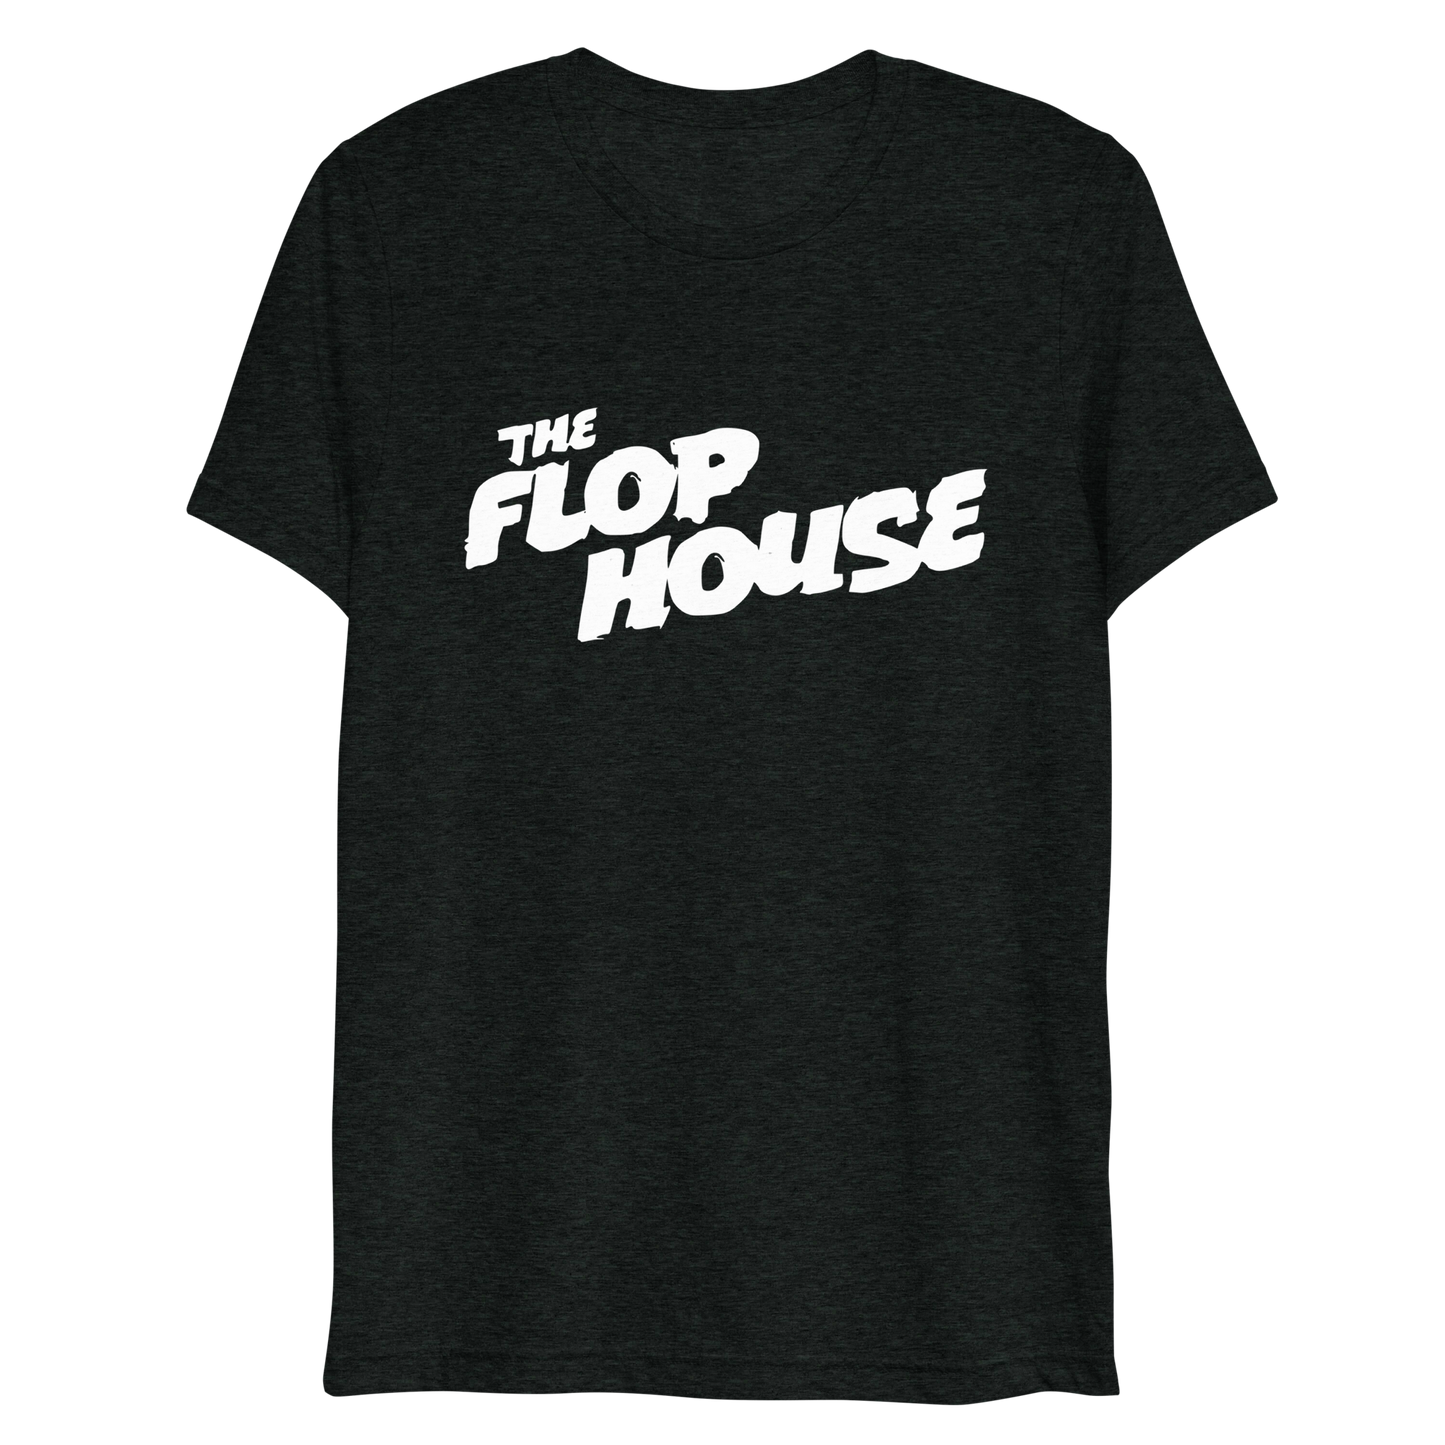 Flop House tri-blend T-shirt